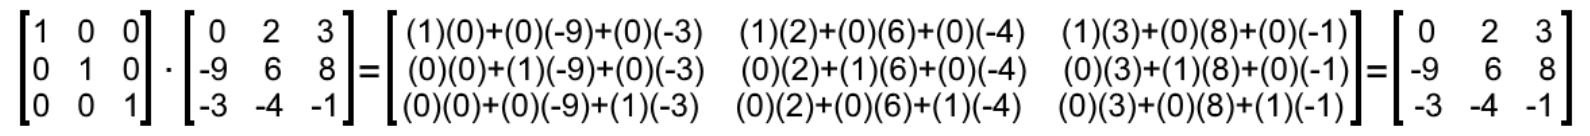 Equation 10: Matrix multiplication involving an identity matrix